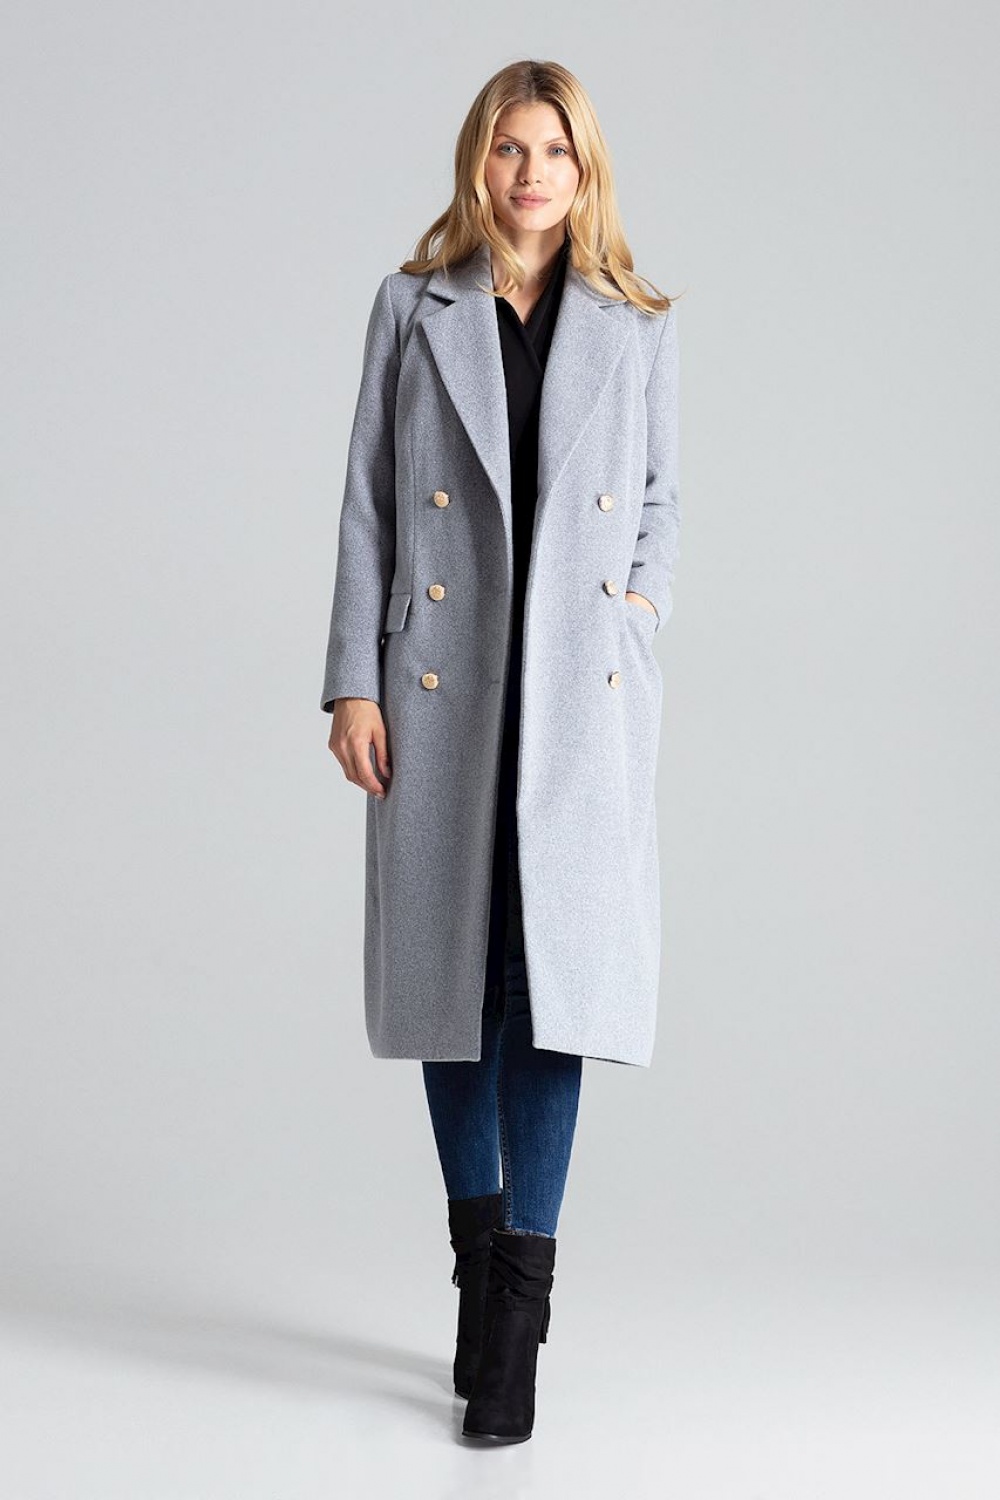 Coat model 138305 Figl grey Ladies